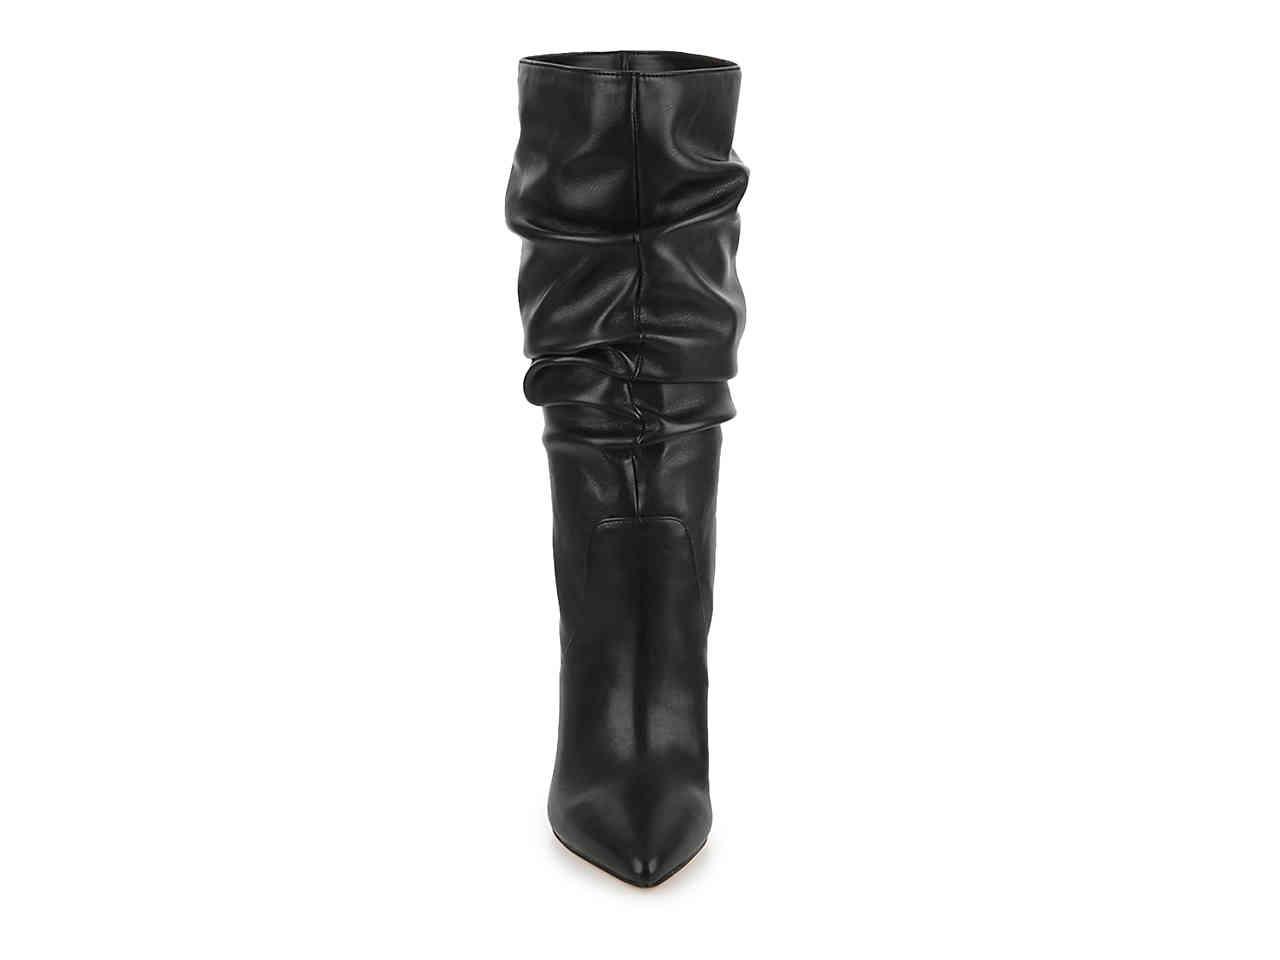 Jessica Simpson Saffrina Boot in Black - Lyst1280 x 960